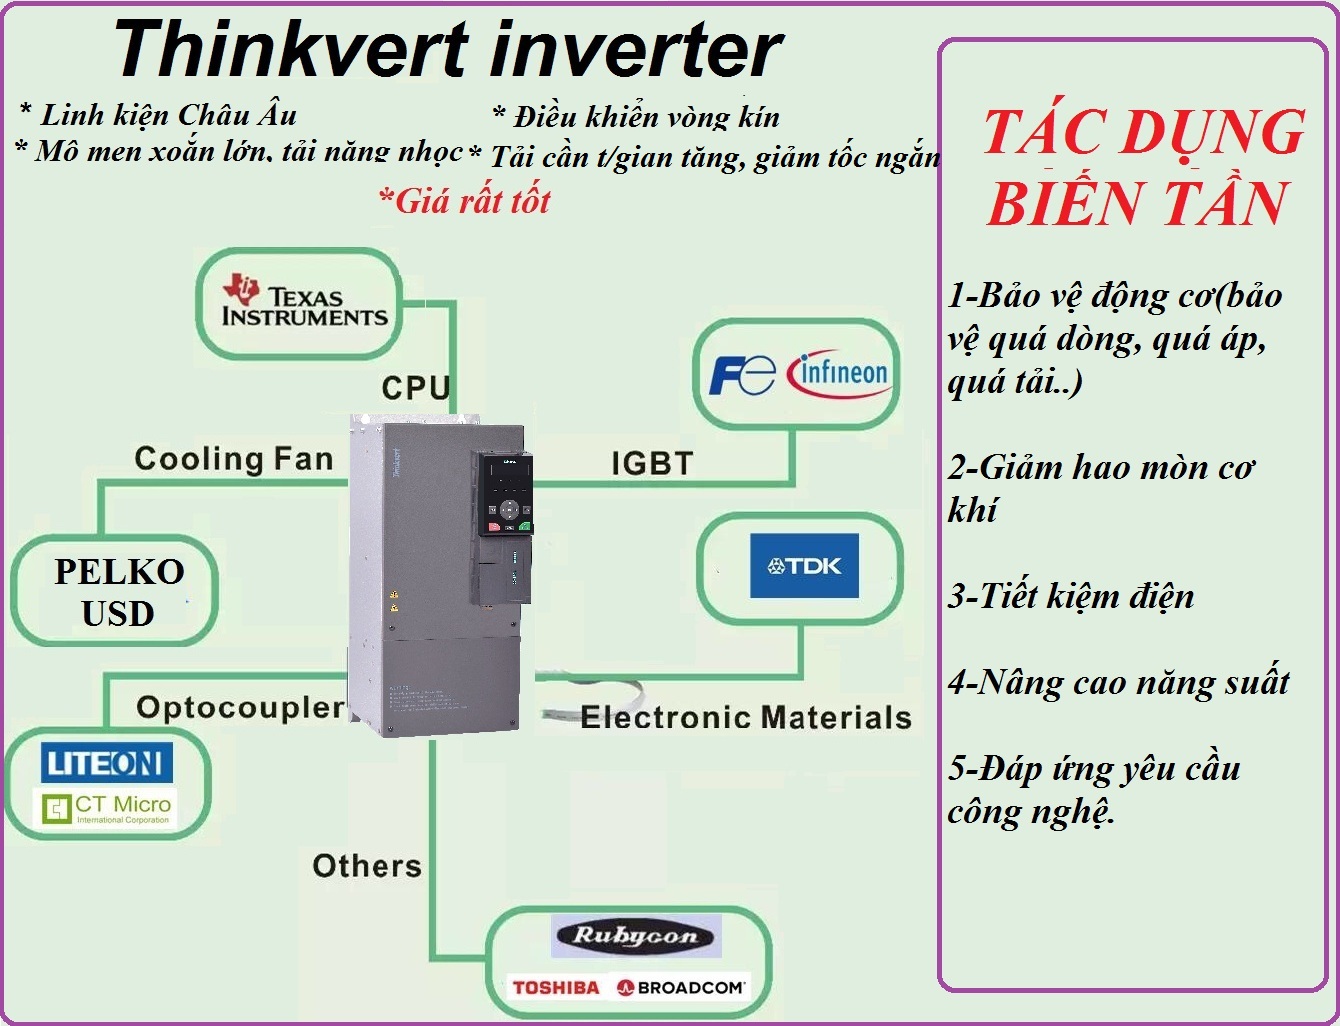 Thinkvert inverter 02